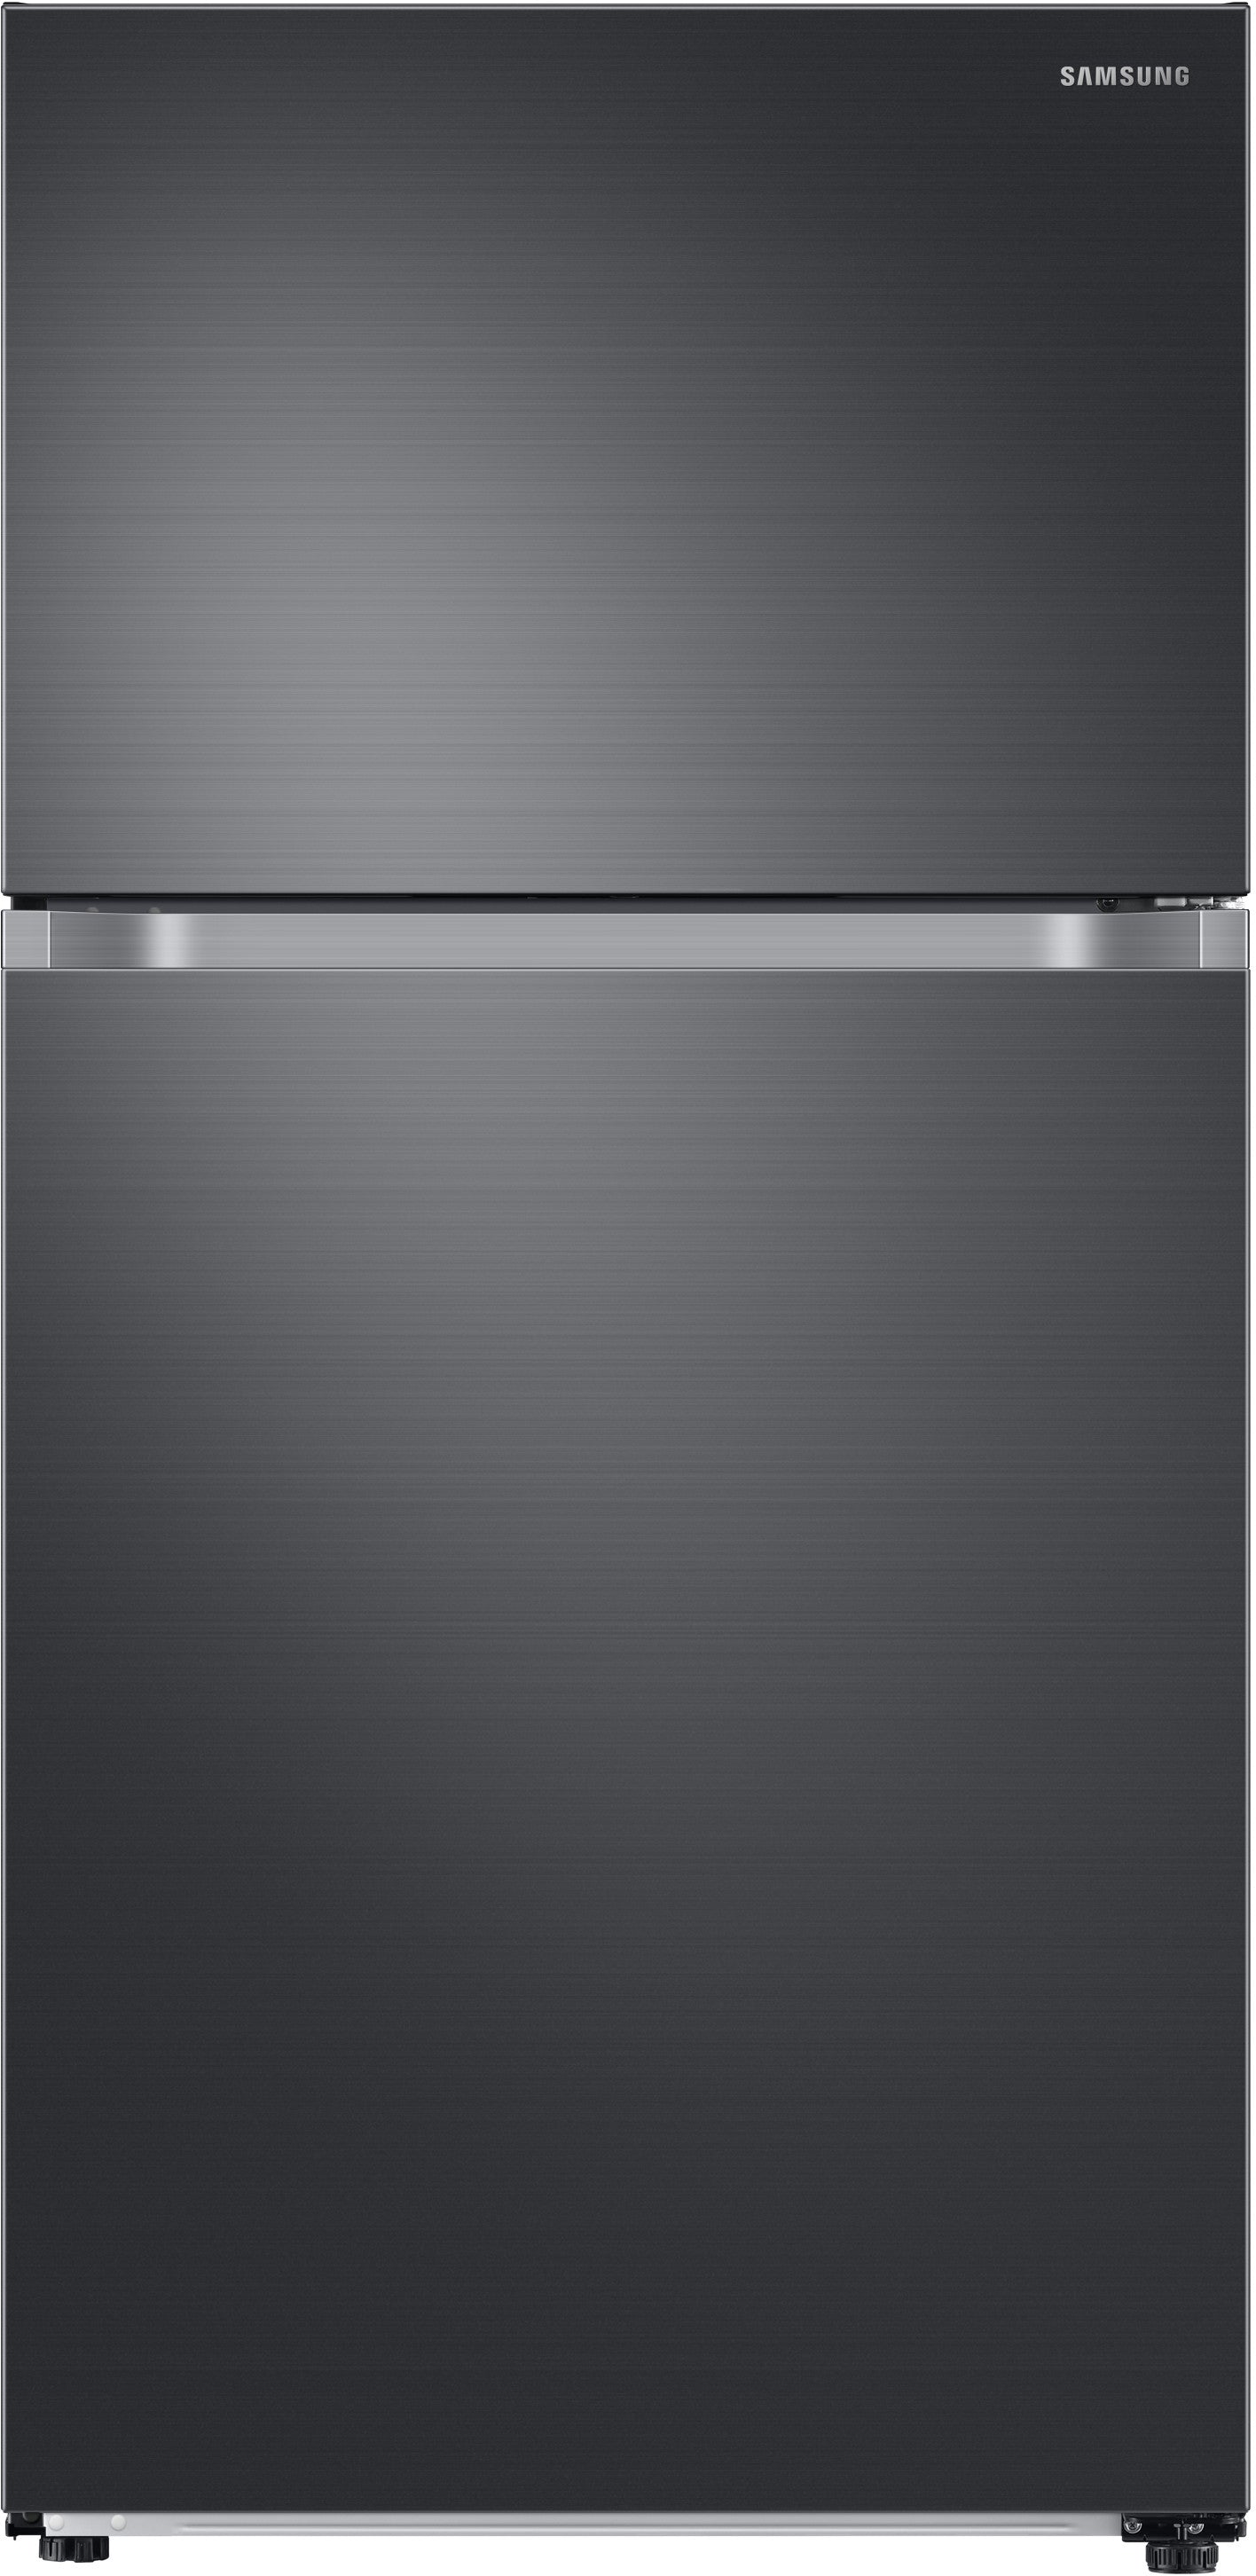 Samsung RT21M6213SG/AA 21 Cu. Ft. Top Freezer Refrigerator With Flex zone